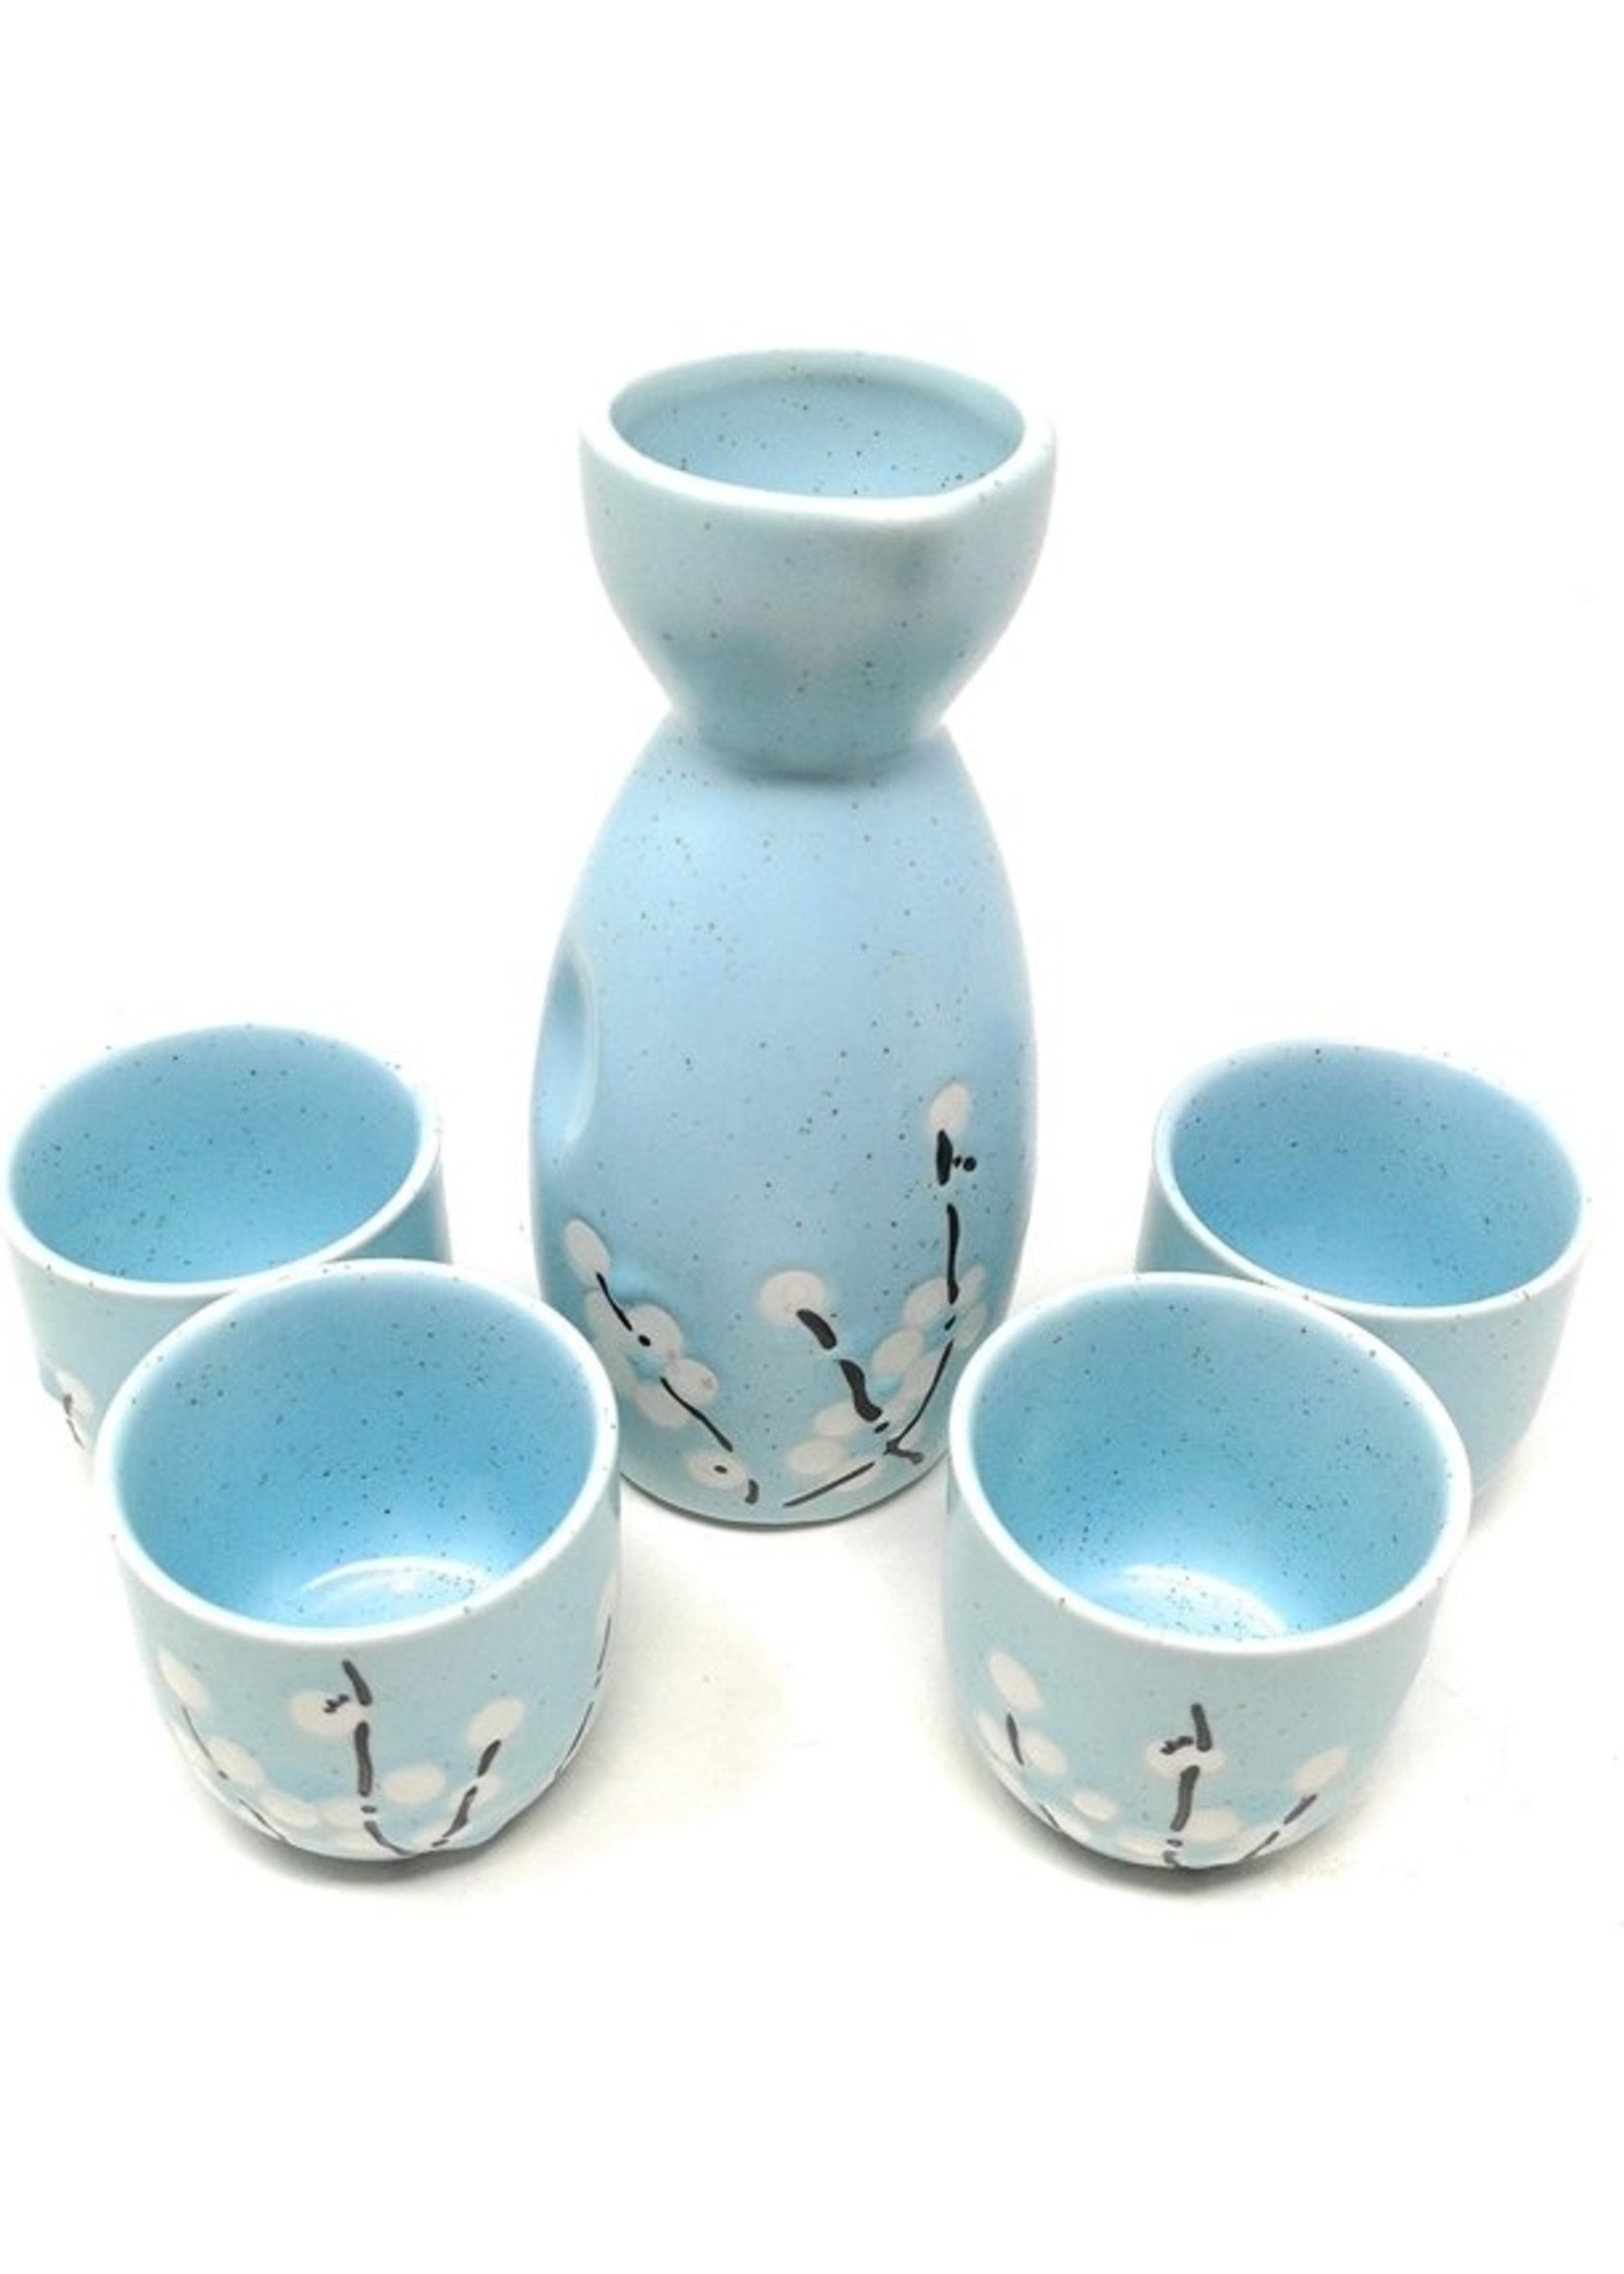 Sake Pot Set - Blue with White Blossoms 5 Piece set